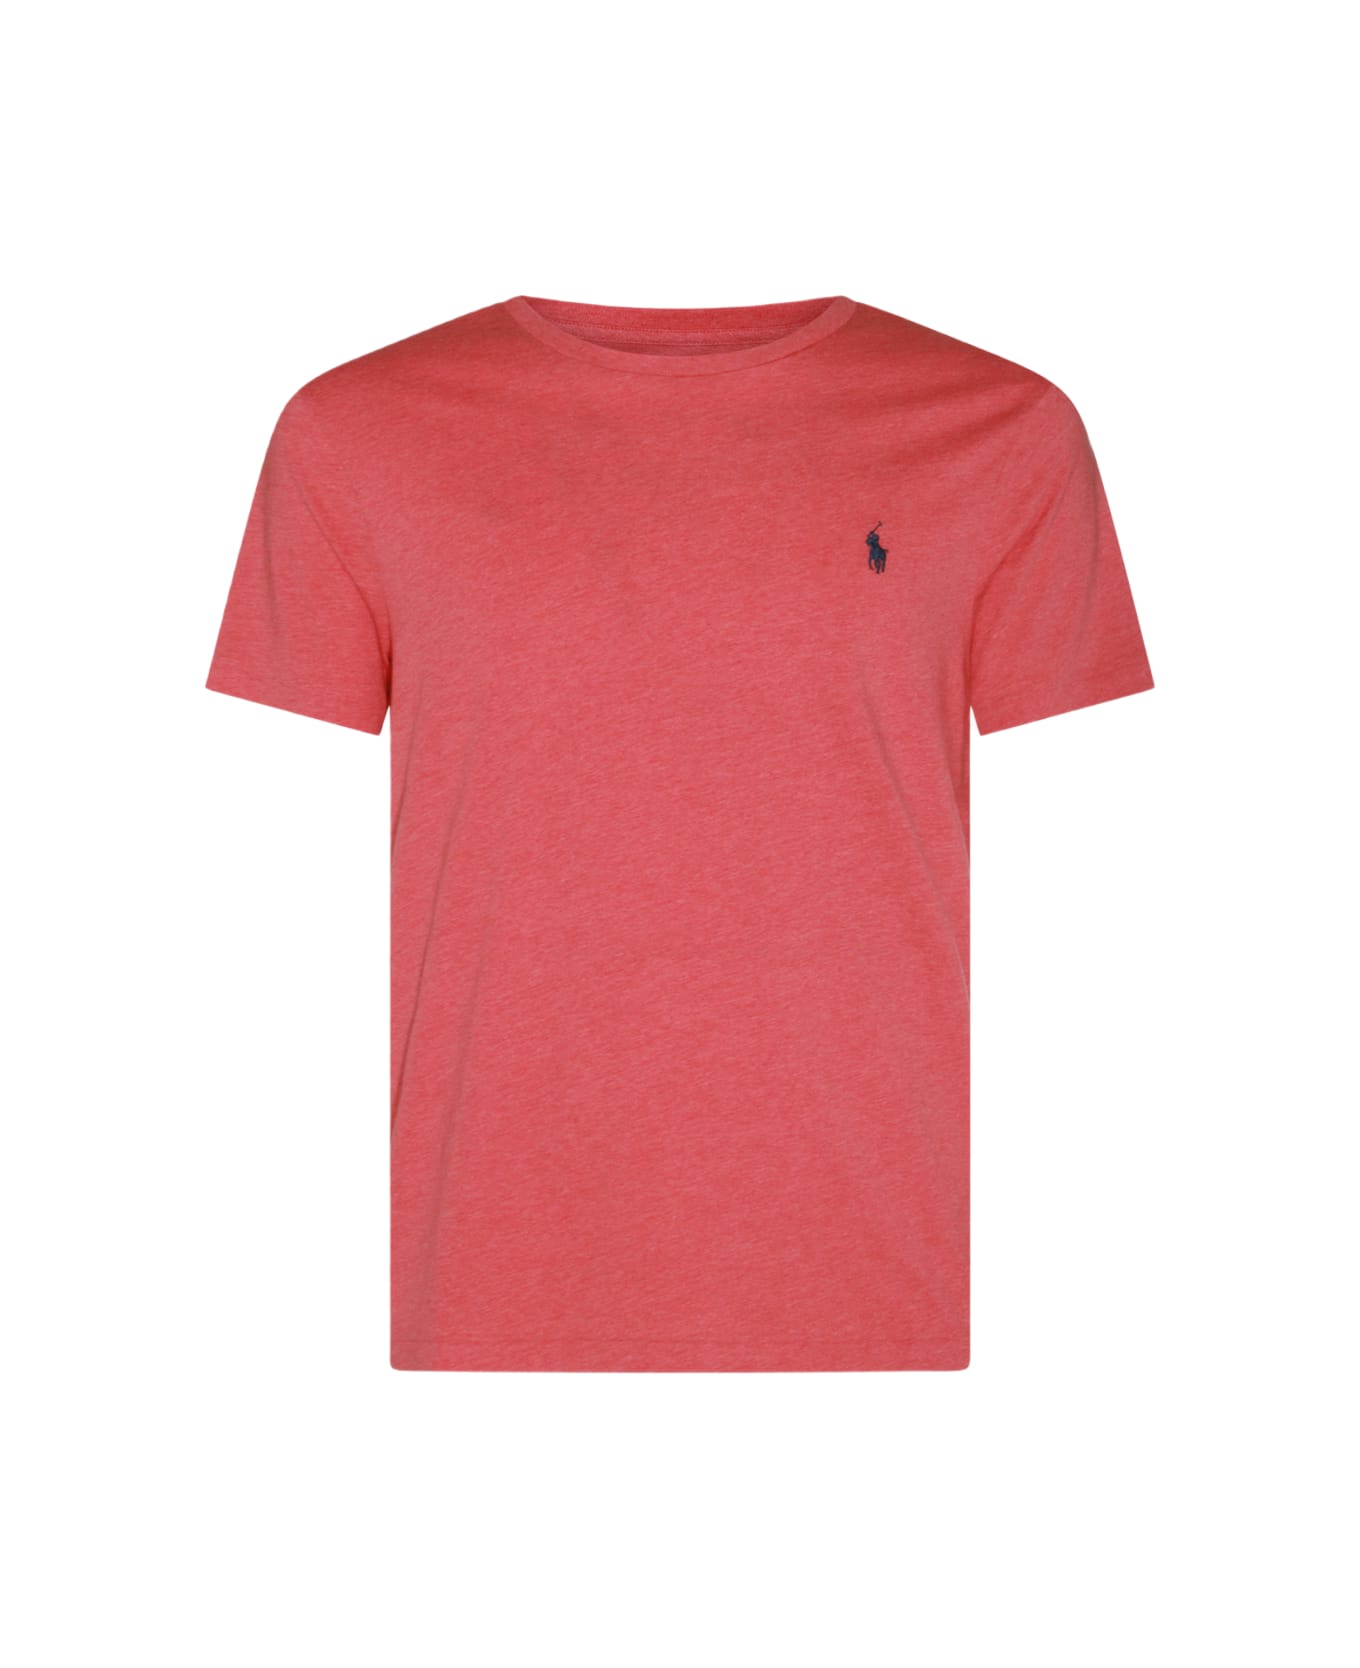 Polo Ralph Lauren Red Cotton T-shirt - HIGHLAND ROSE HEATHER